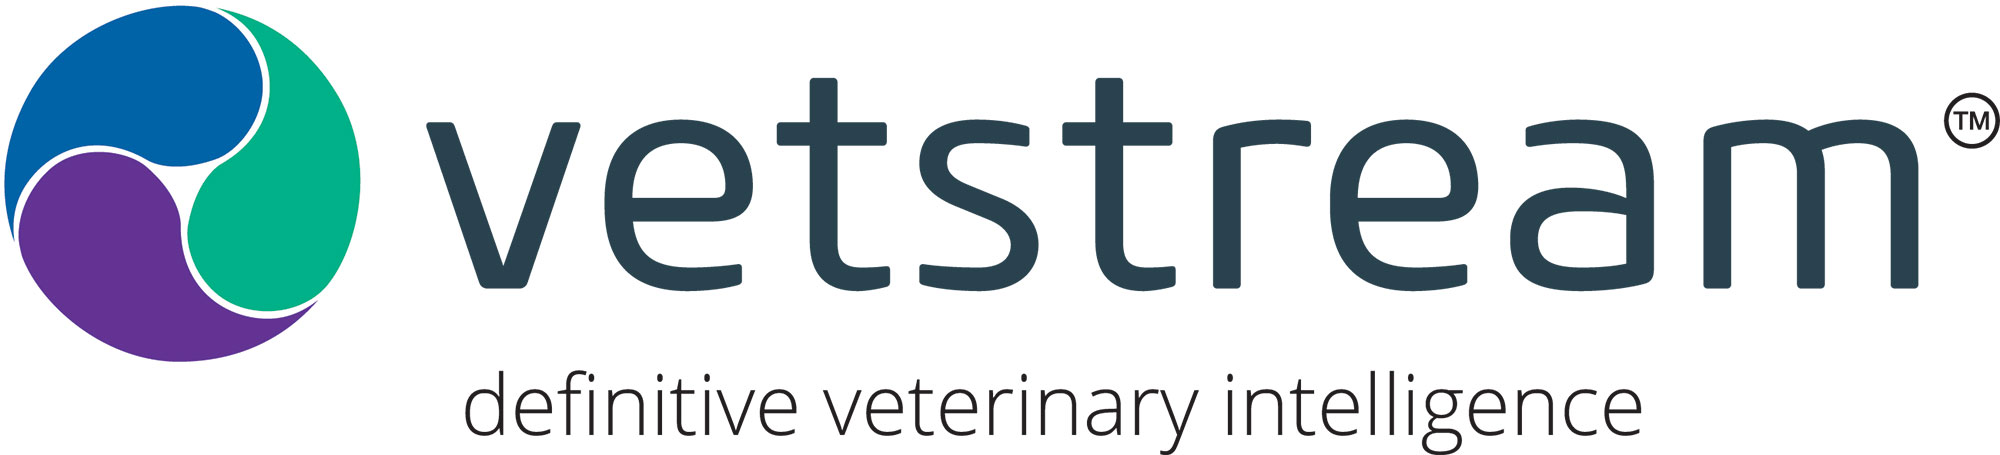 vetstream-logo-big